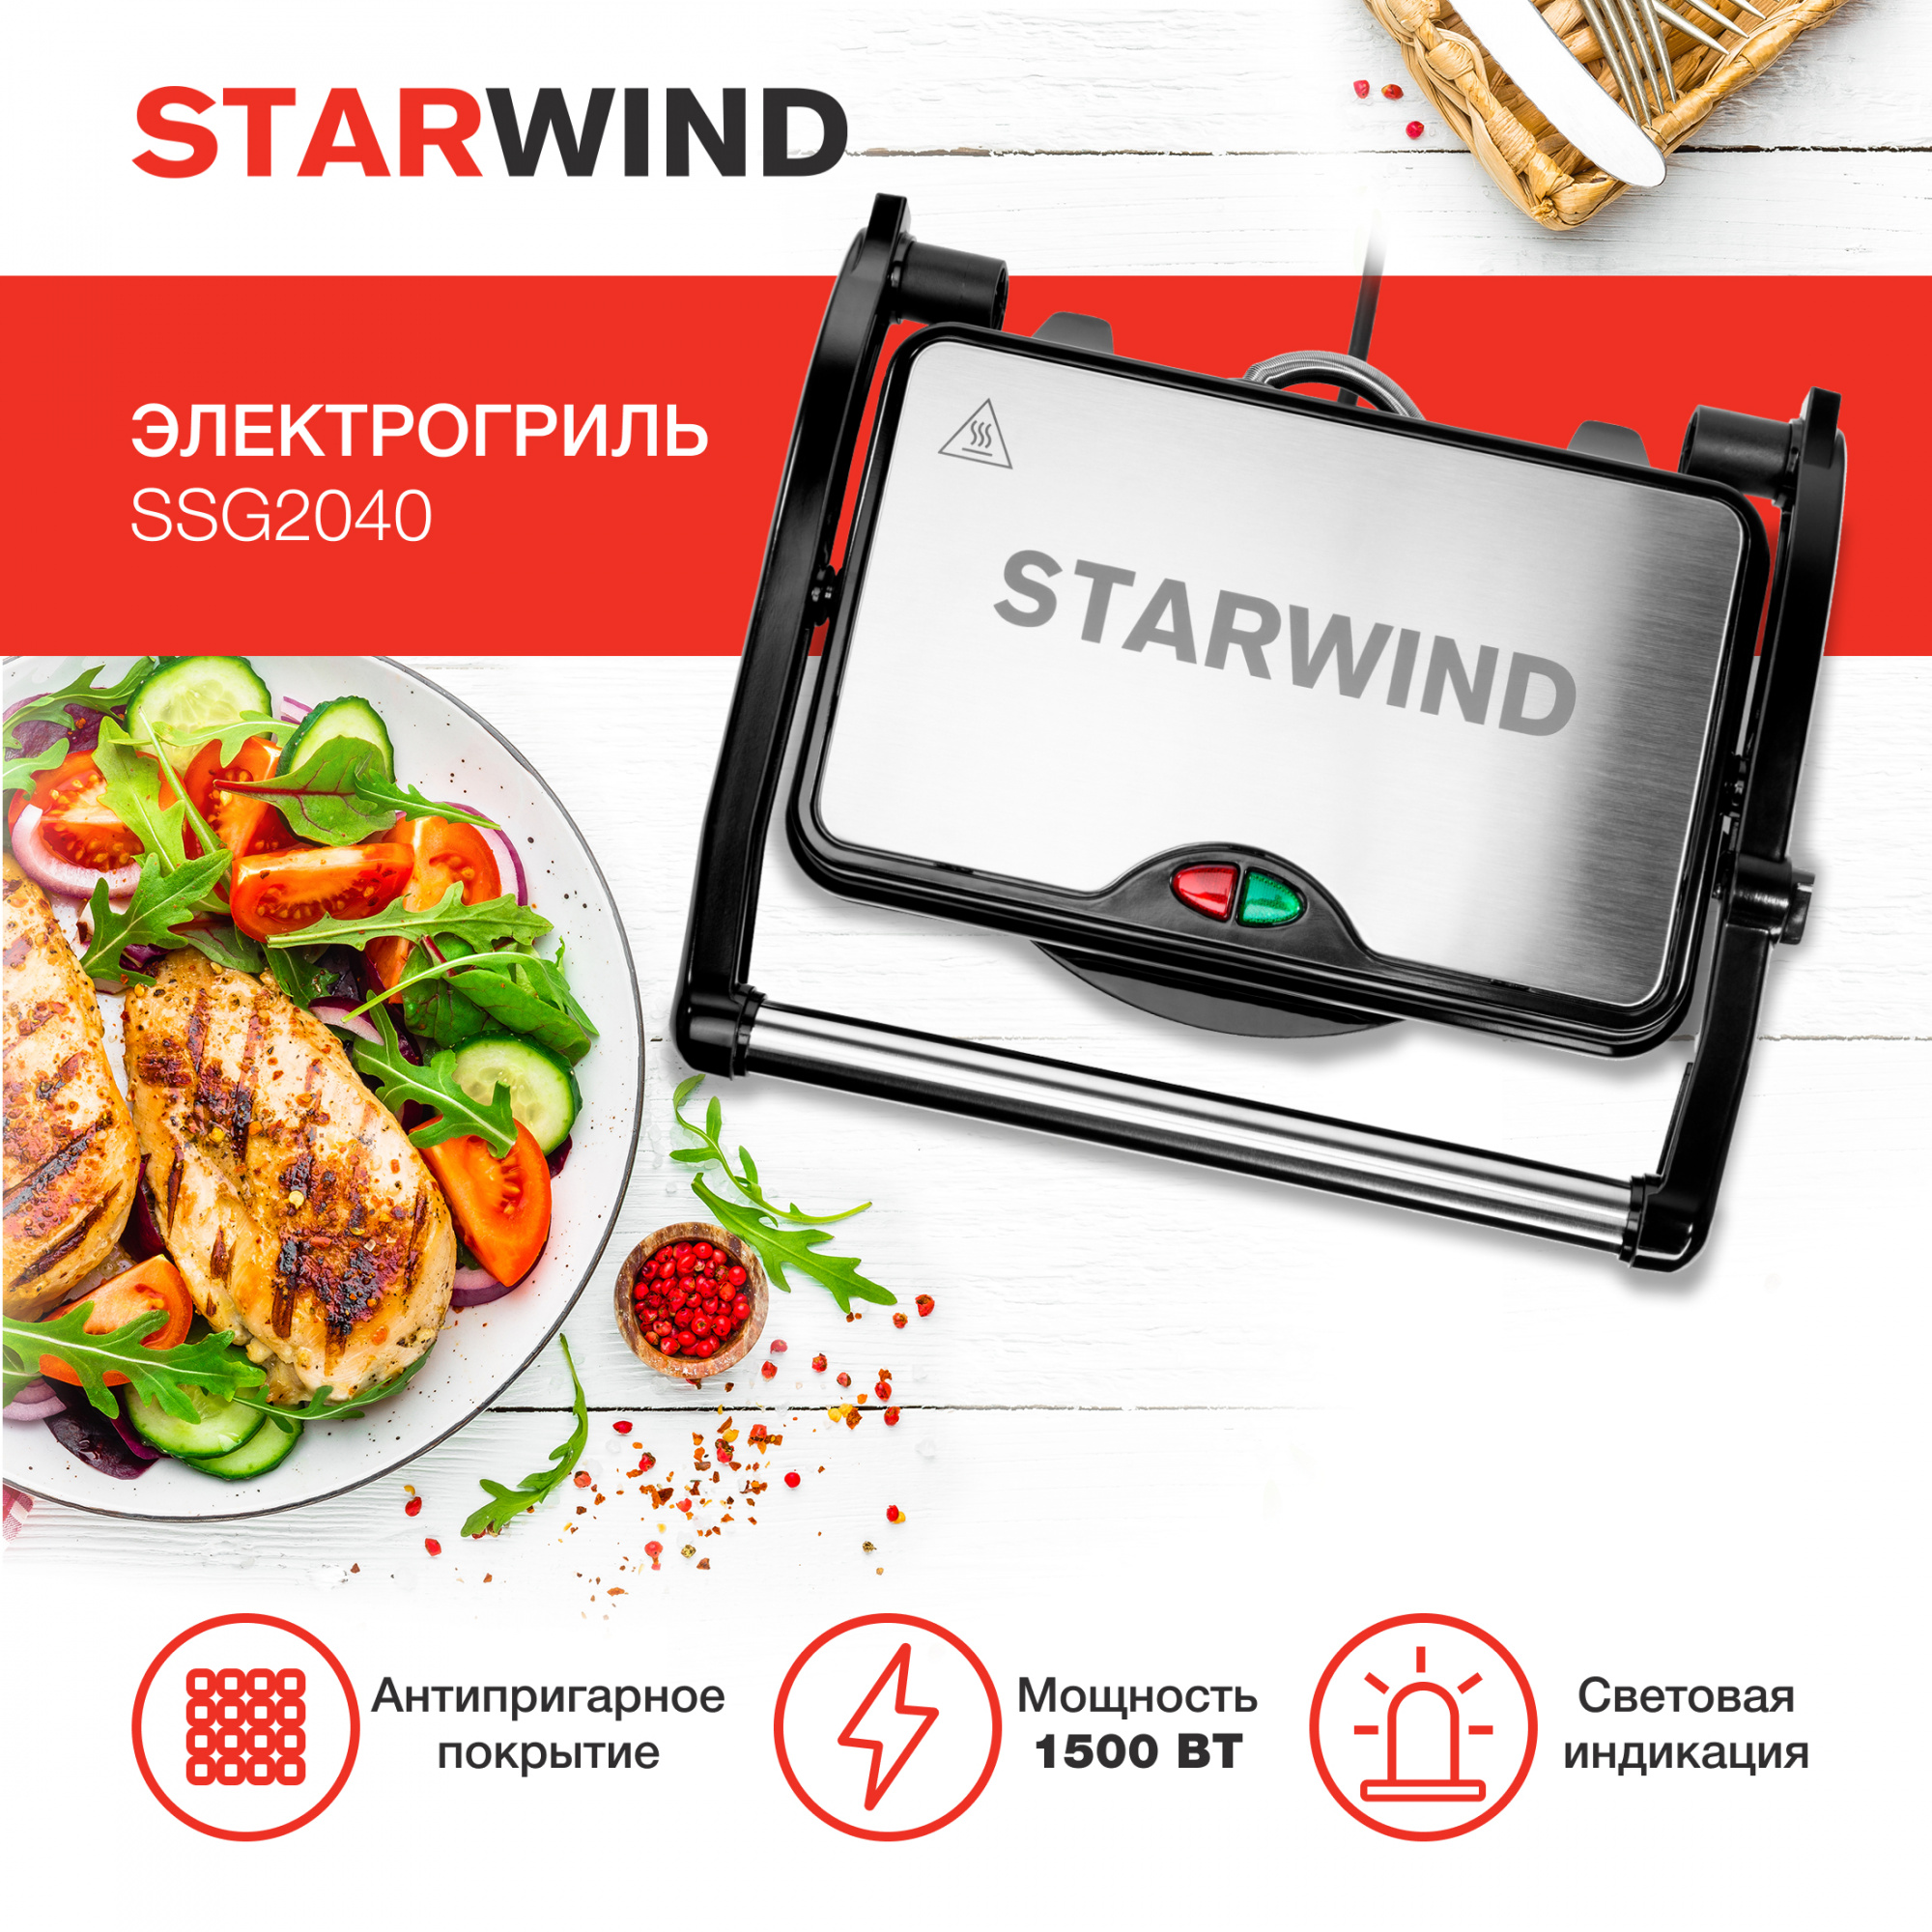 Электрогриль Starwind SSG2040 серебристый/черный от магазина Старвинд